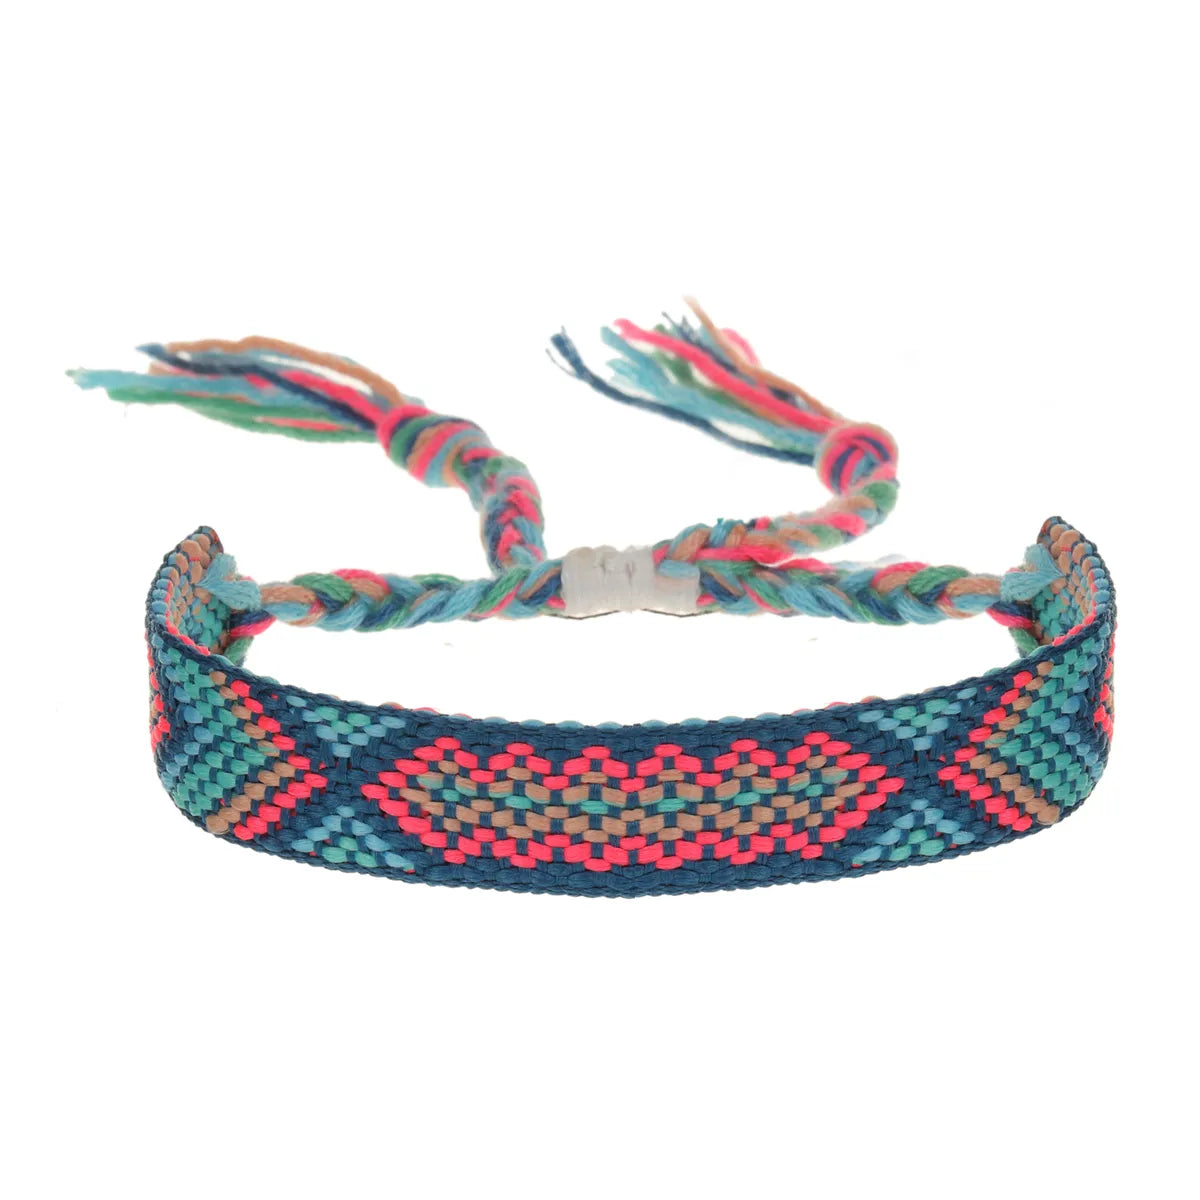 Nepal Woven Friendship Bracelets Adjustable Braided Bracelets with A Sliding Knot Closure for Kid Women Men Waterproof Anklets